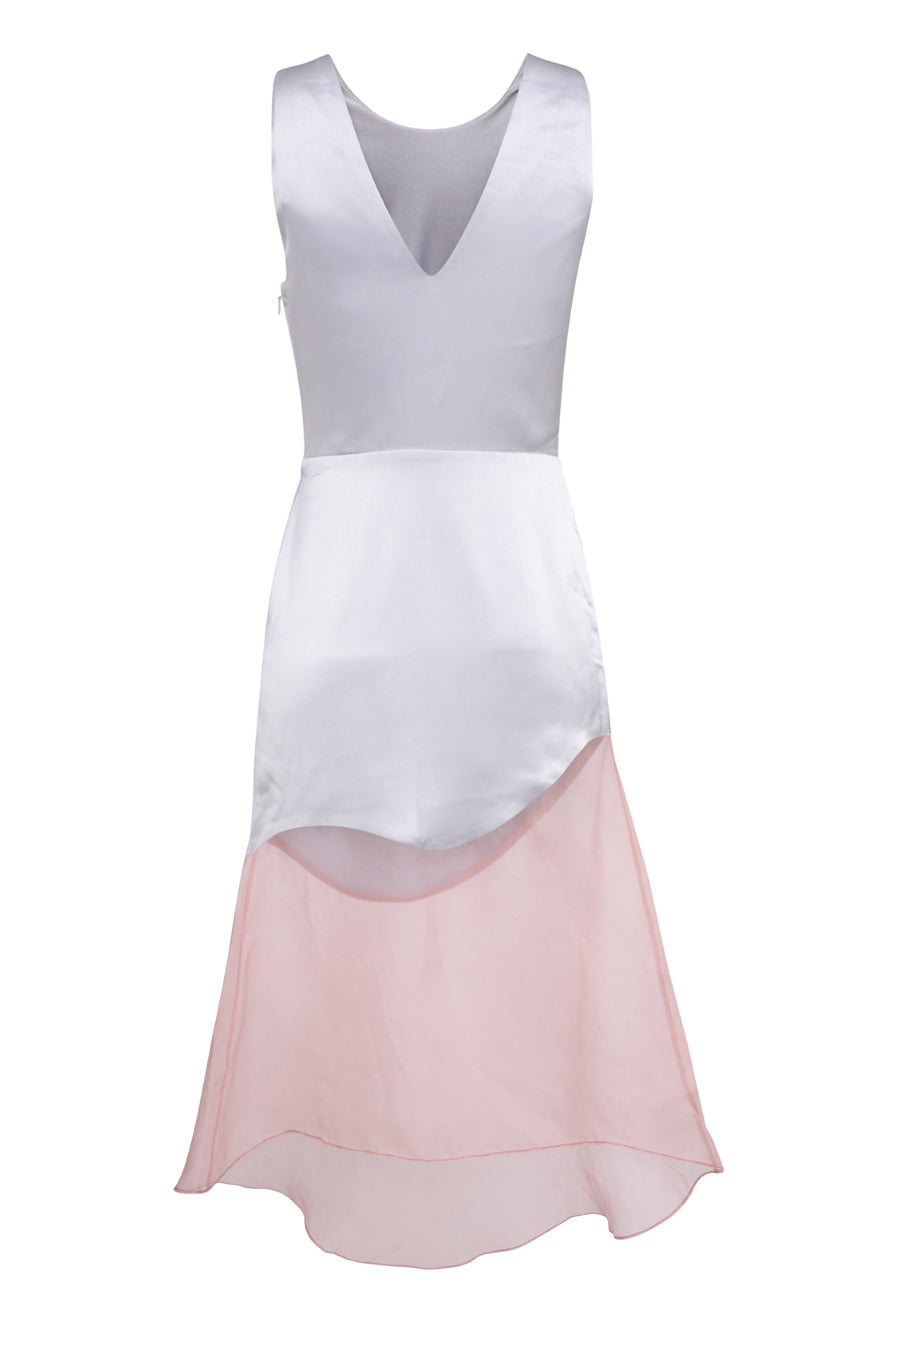 Blush Horizon Dress